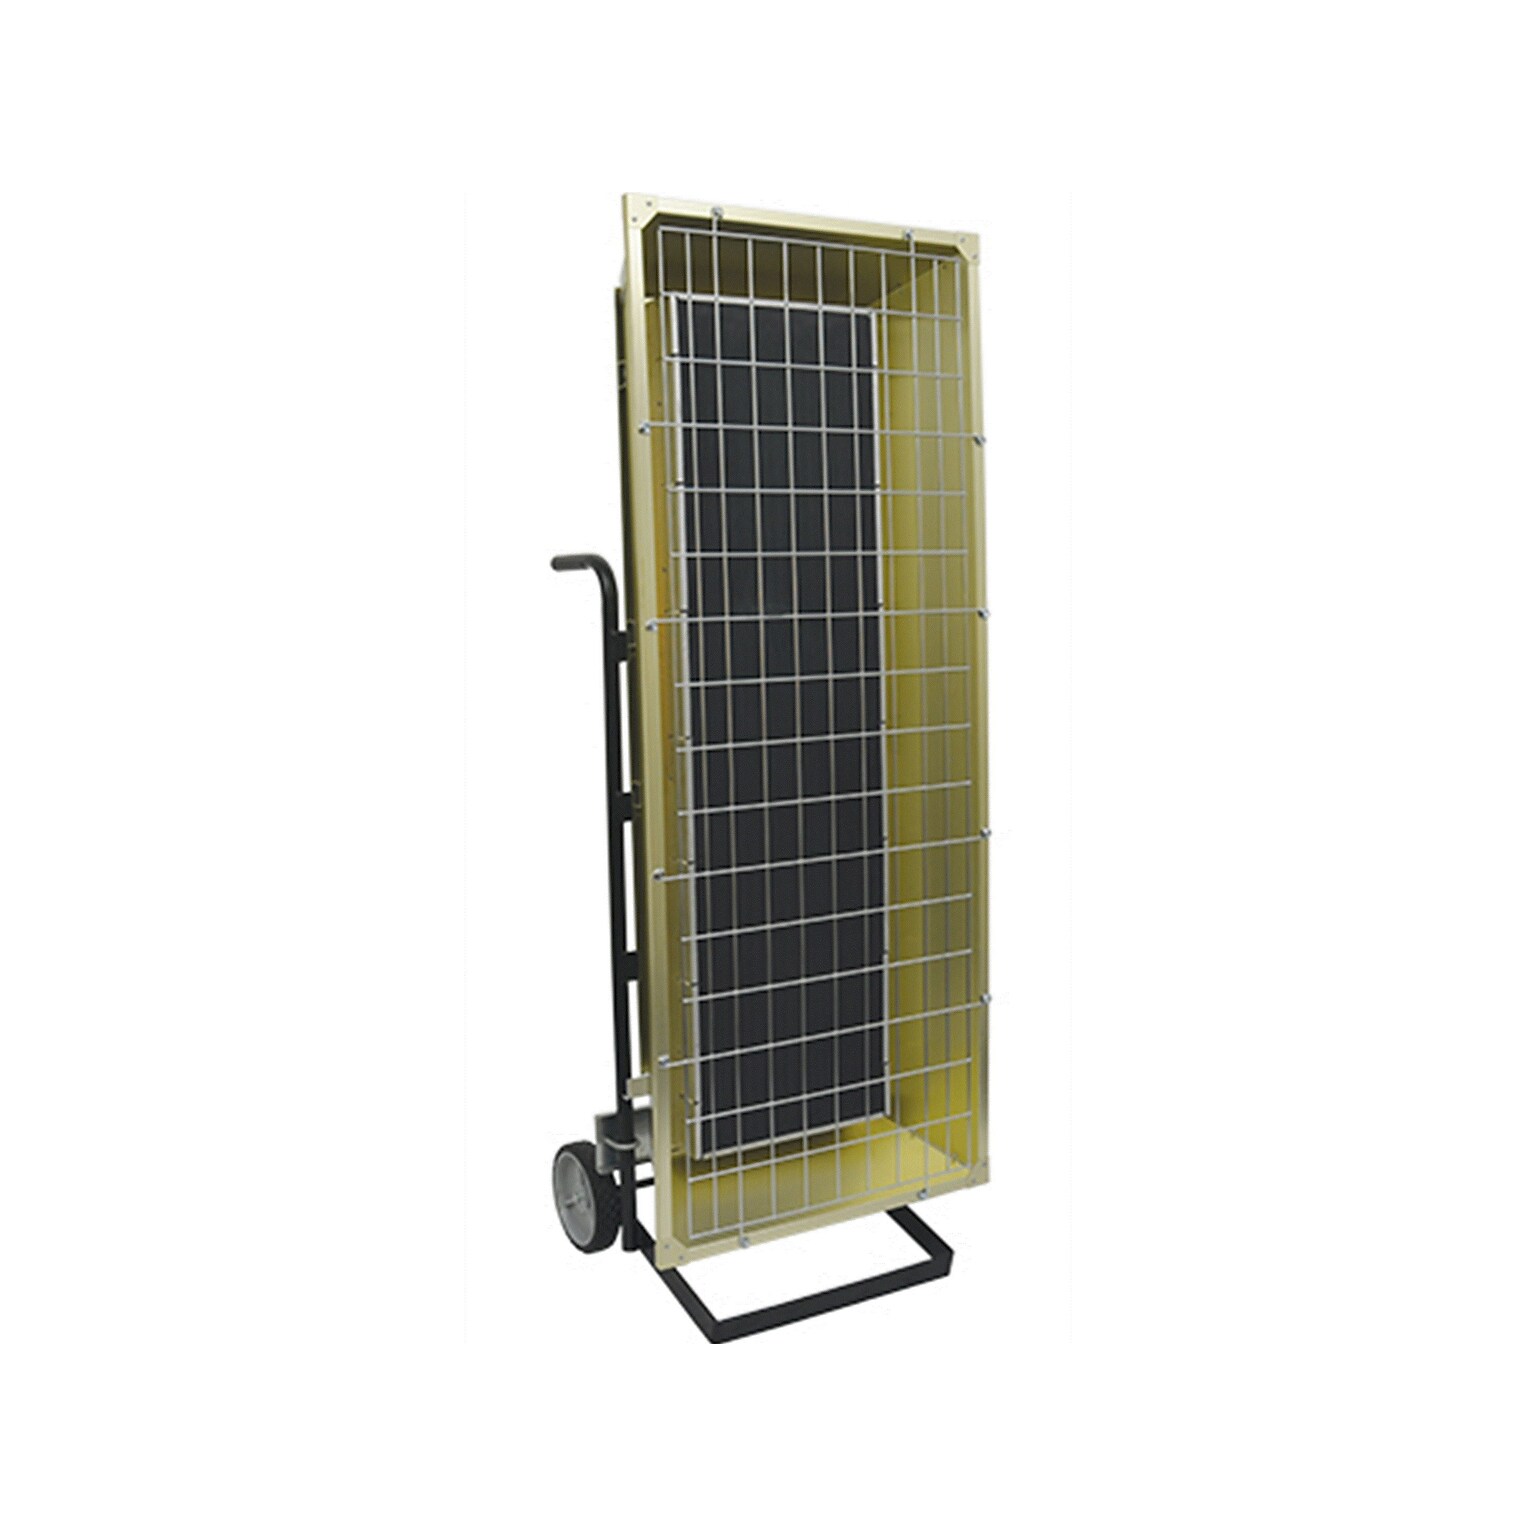 TPI Corporation Fostoria FSP 9500-Watt 32414 BTU Portable Indoor/Outdoor Infrared Electric Heater, Gold (04885102)